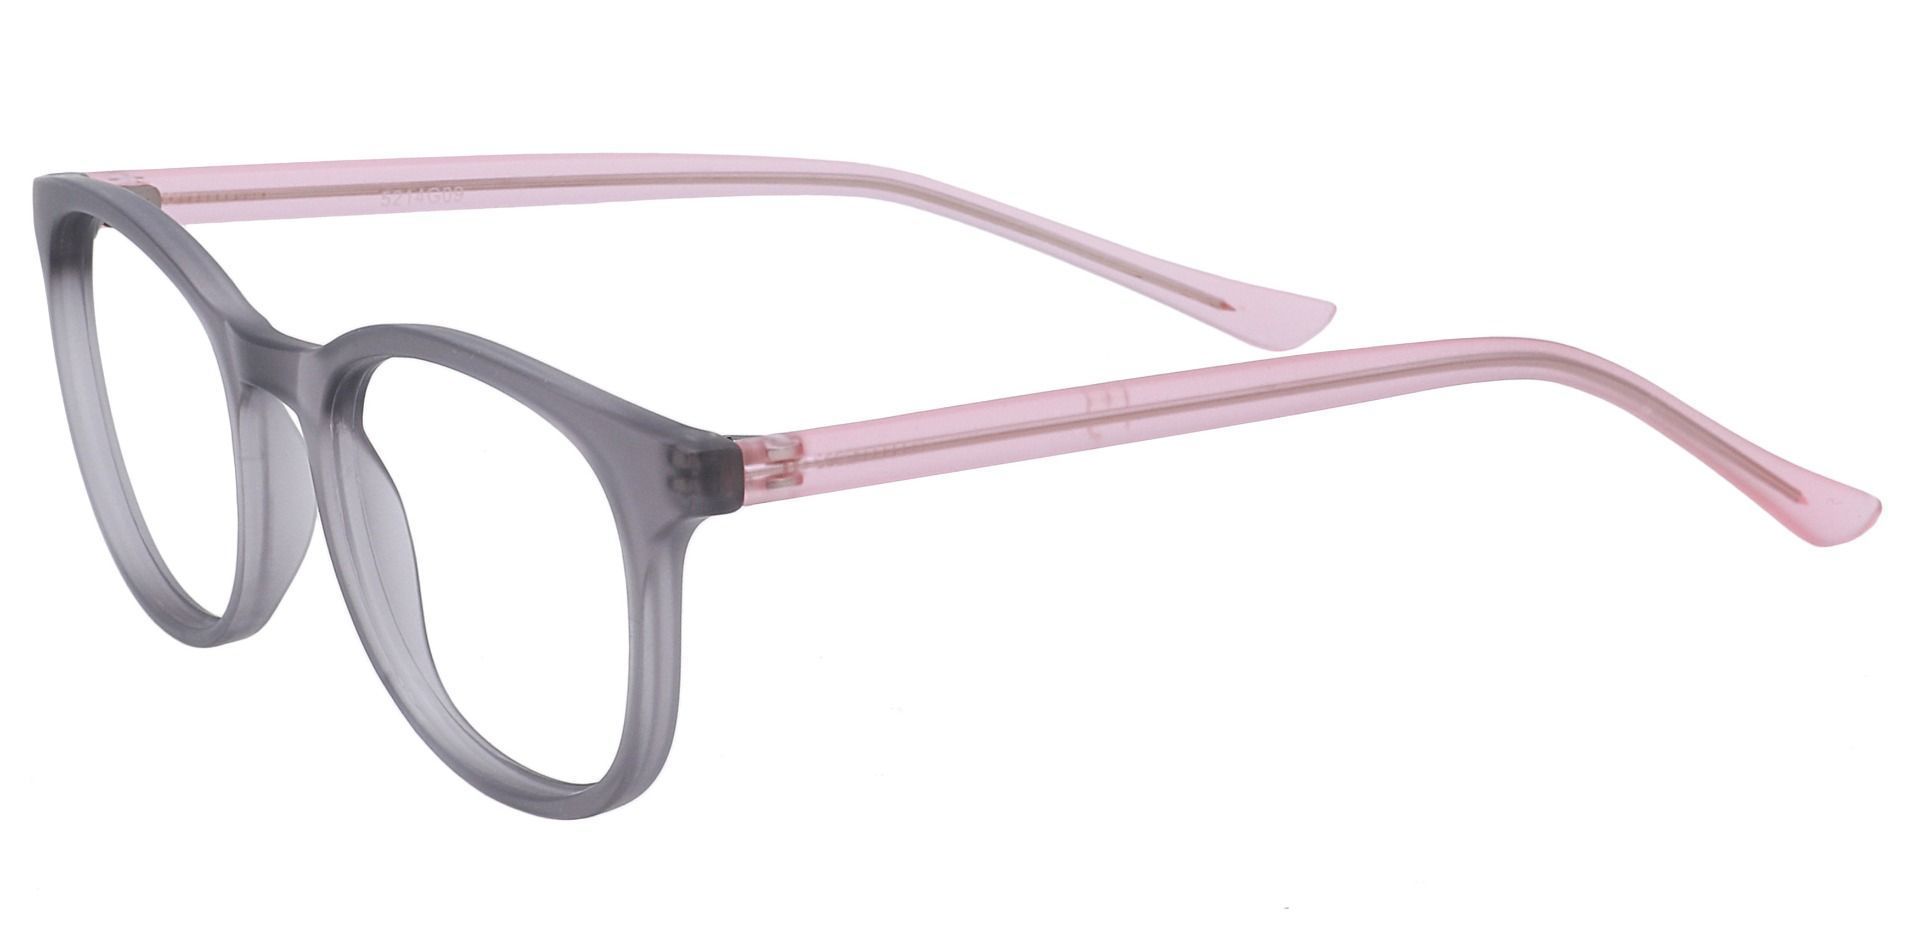 Gretchen Oval Progressive Glasses - Matte Grey Crystal